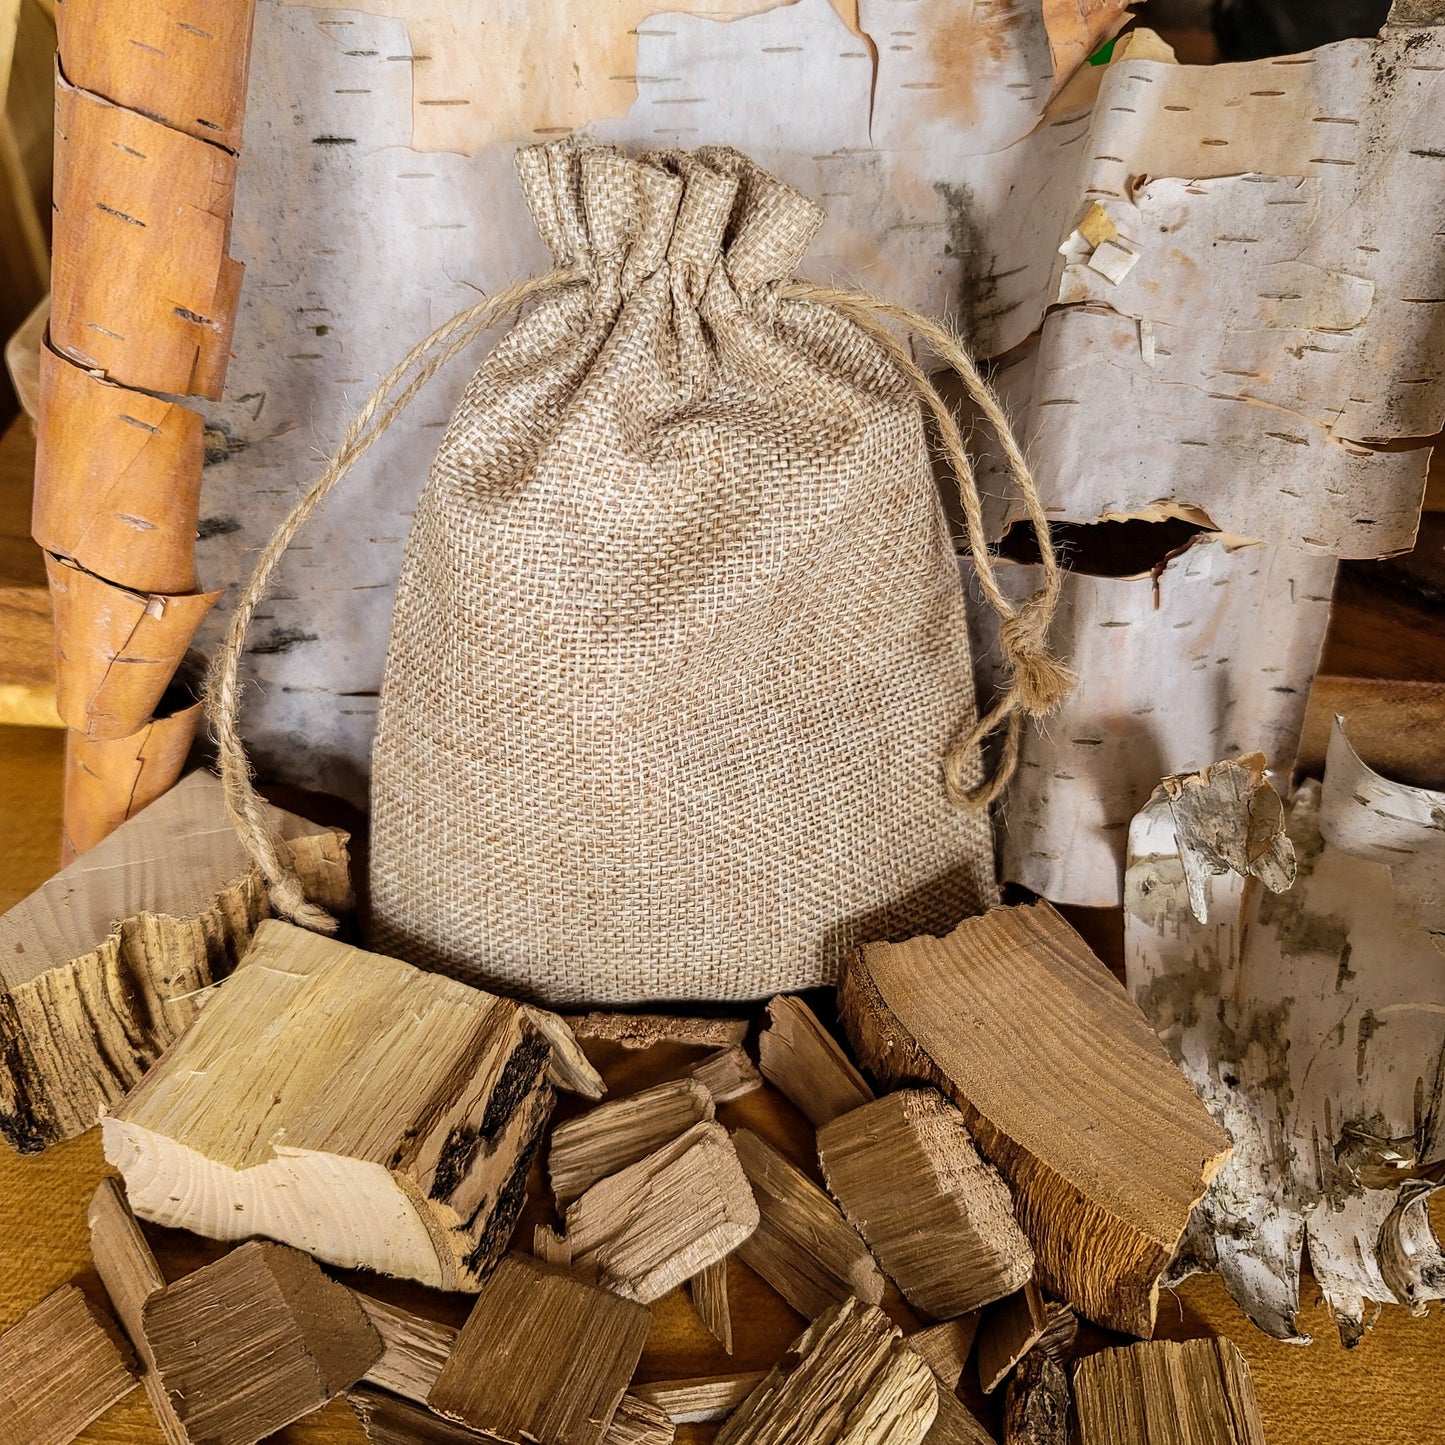 Balefire Bundle - Sacred Wood for Bonfires & Rituals